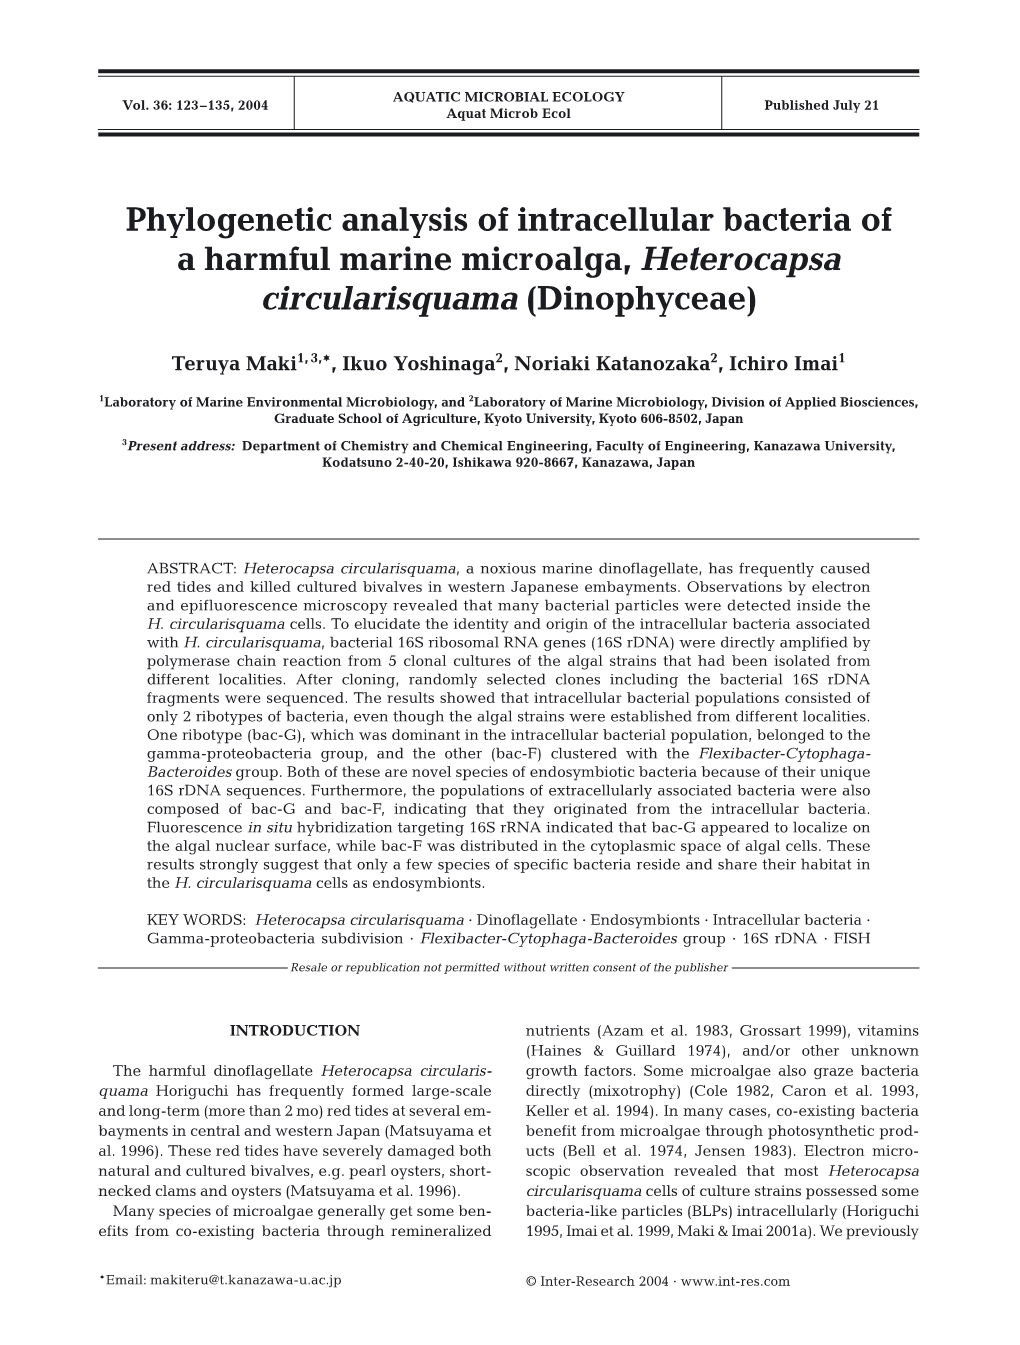 Phylogenetic Analysis of Intracellular Bacteria of a Harmful Marine Microalga, Heterocapsa Circularisquama (Dinophyceae)